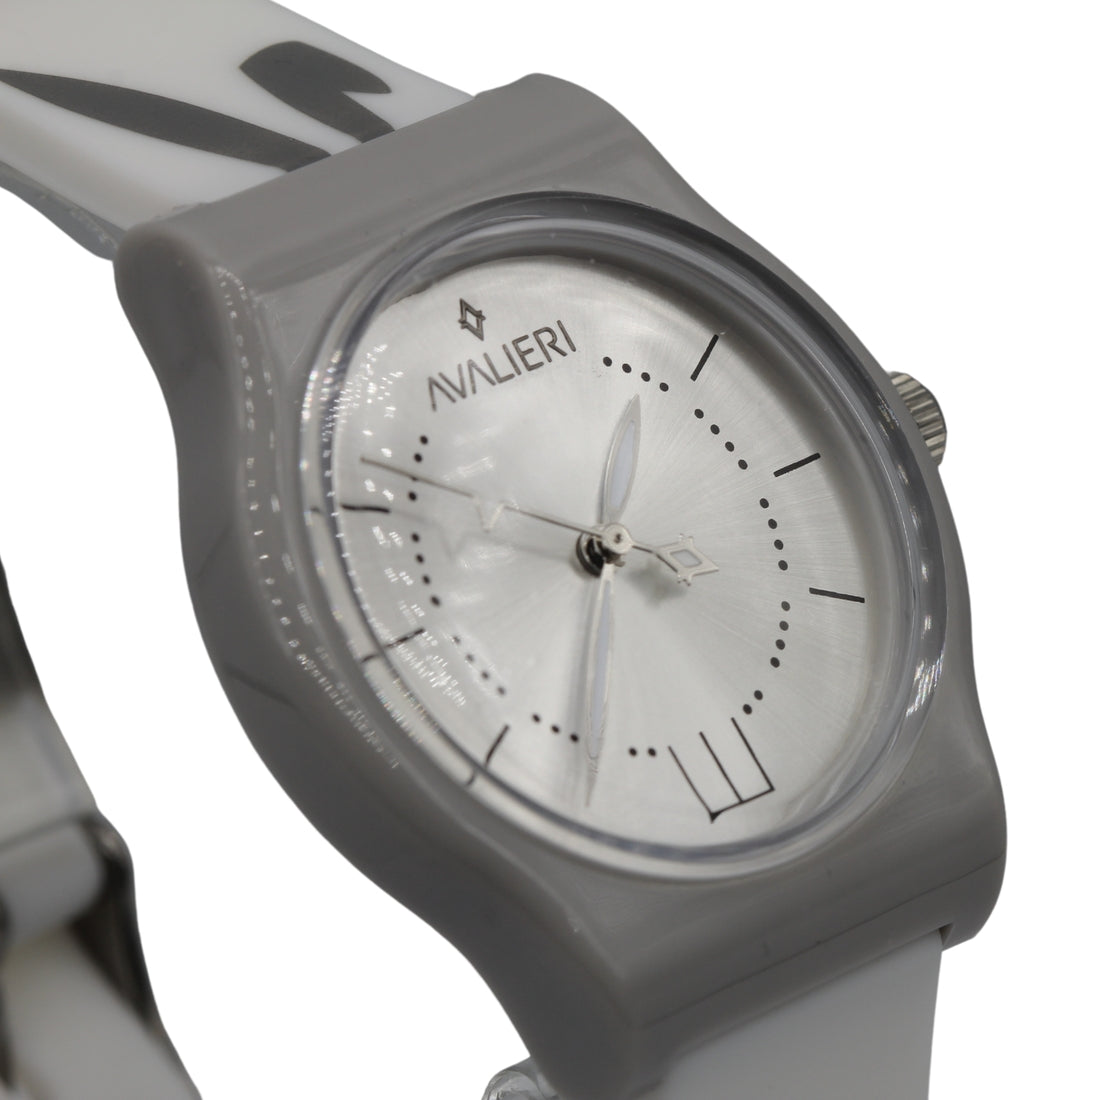 Avalieri Kids' Quartz Watch, Silver Dial - AVK-0009